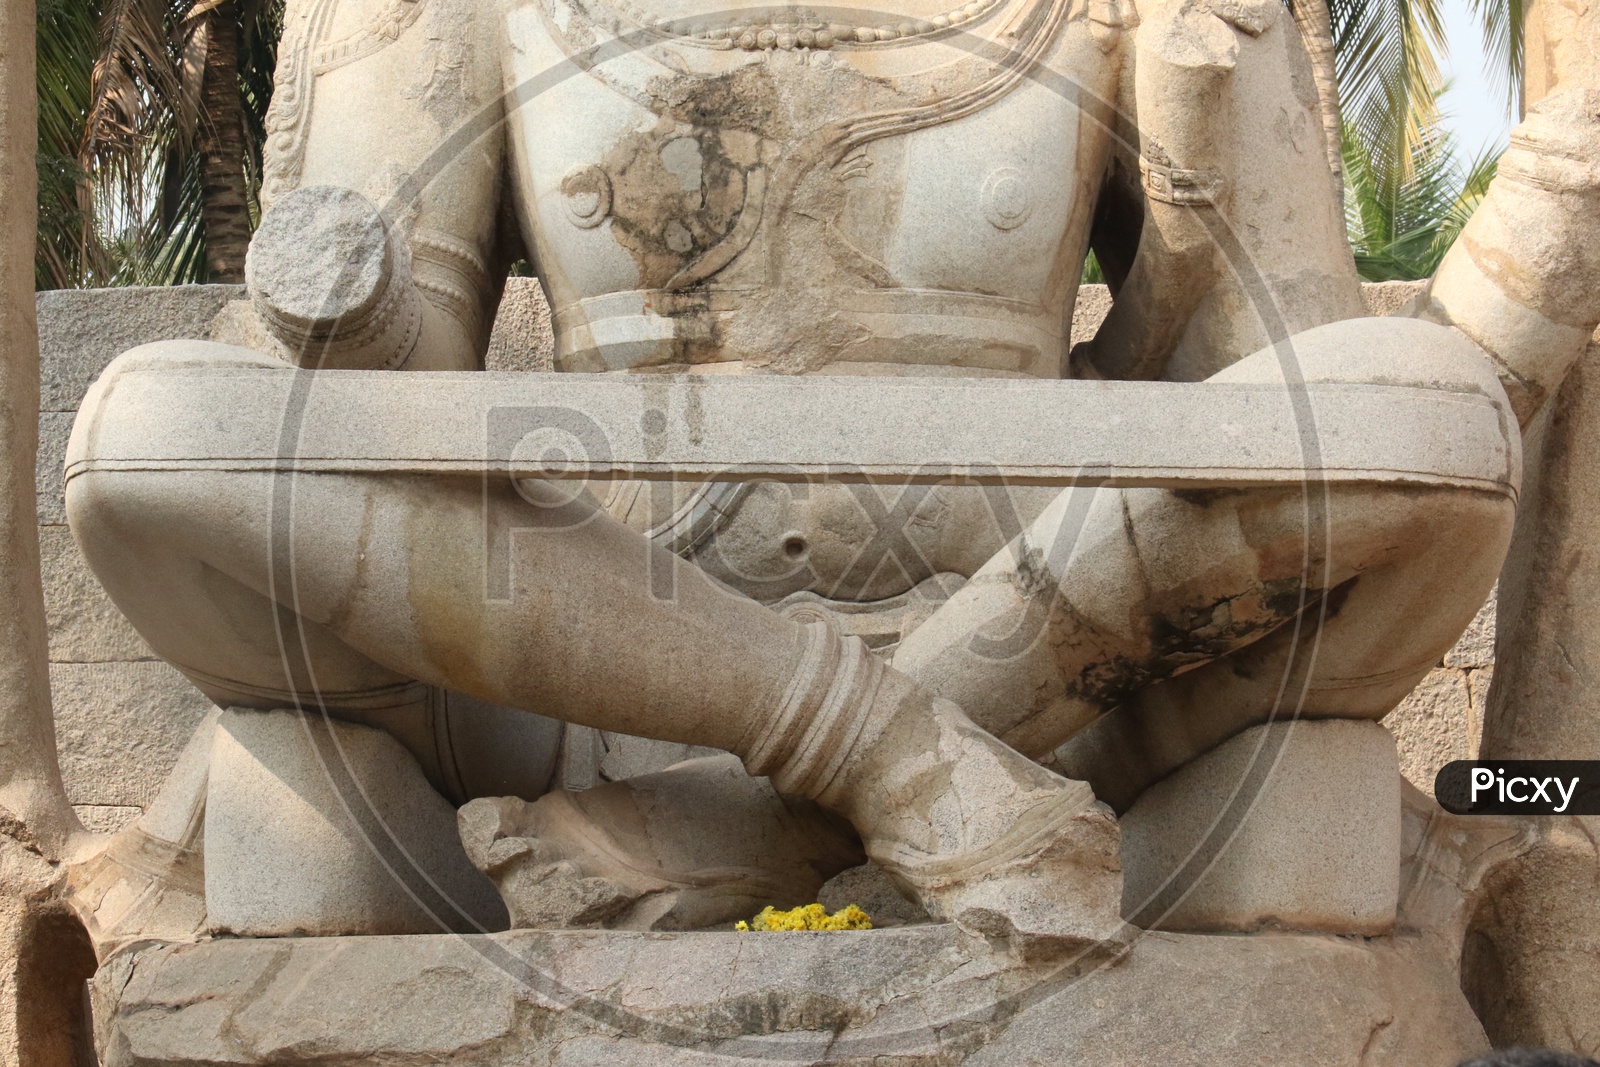 The Old Ruins Of Stone sculpture Of Hindu God Lakshmi Narasimha swamy at Sri Lakshmi Narasimha Temple in Hampi , karnataka